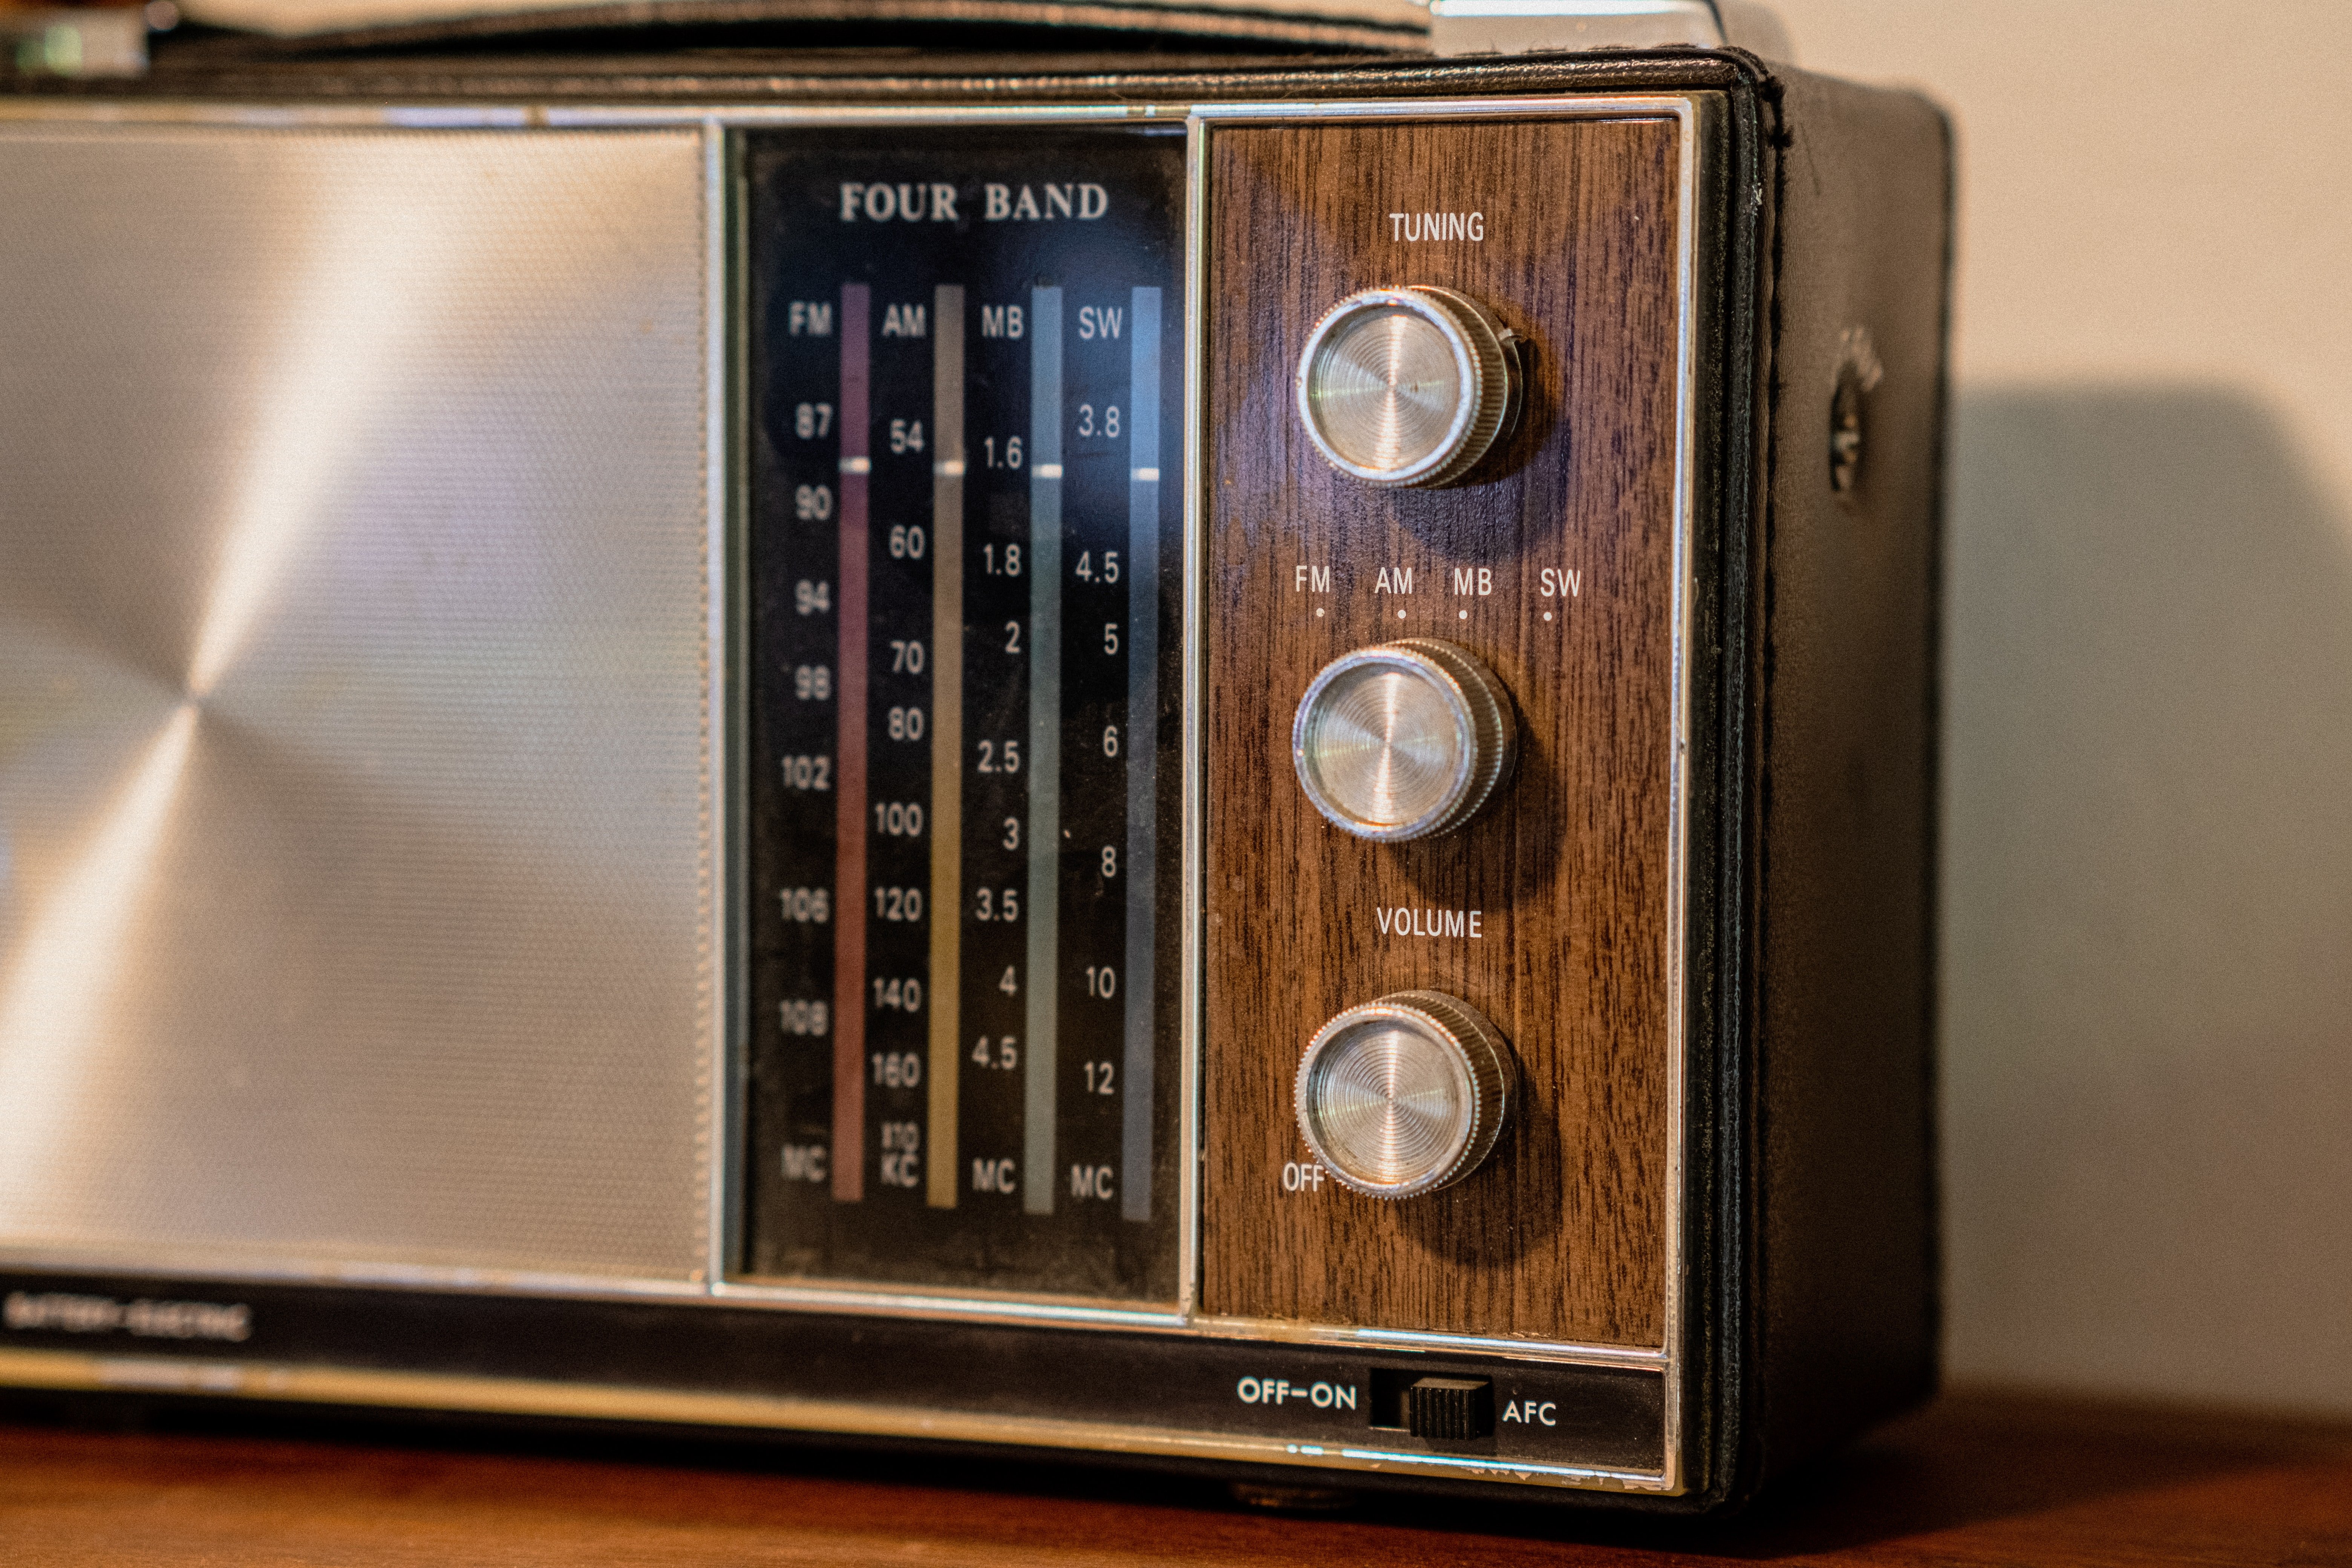 Carl found an old radio in his barn. | Source: Unsplash